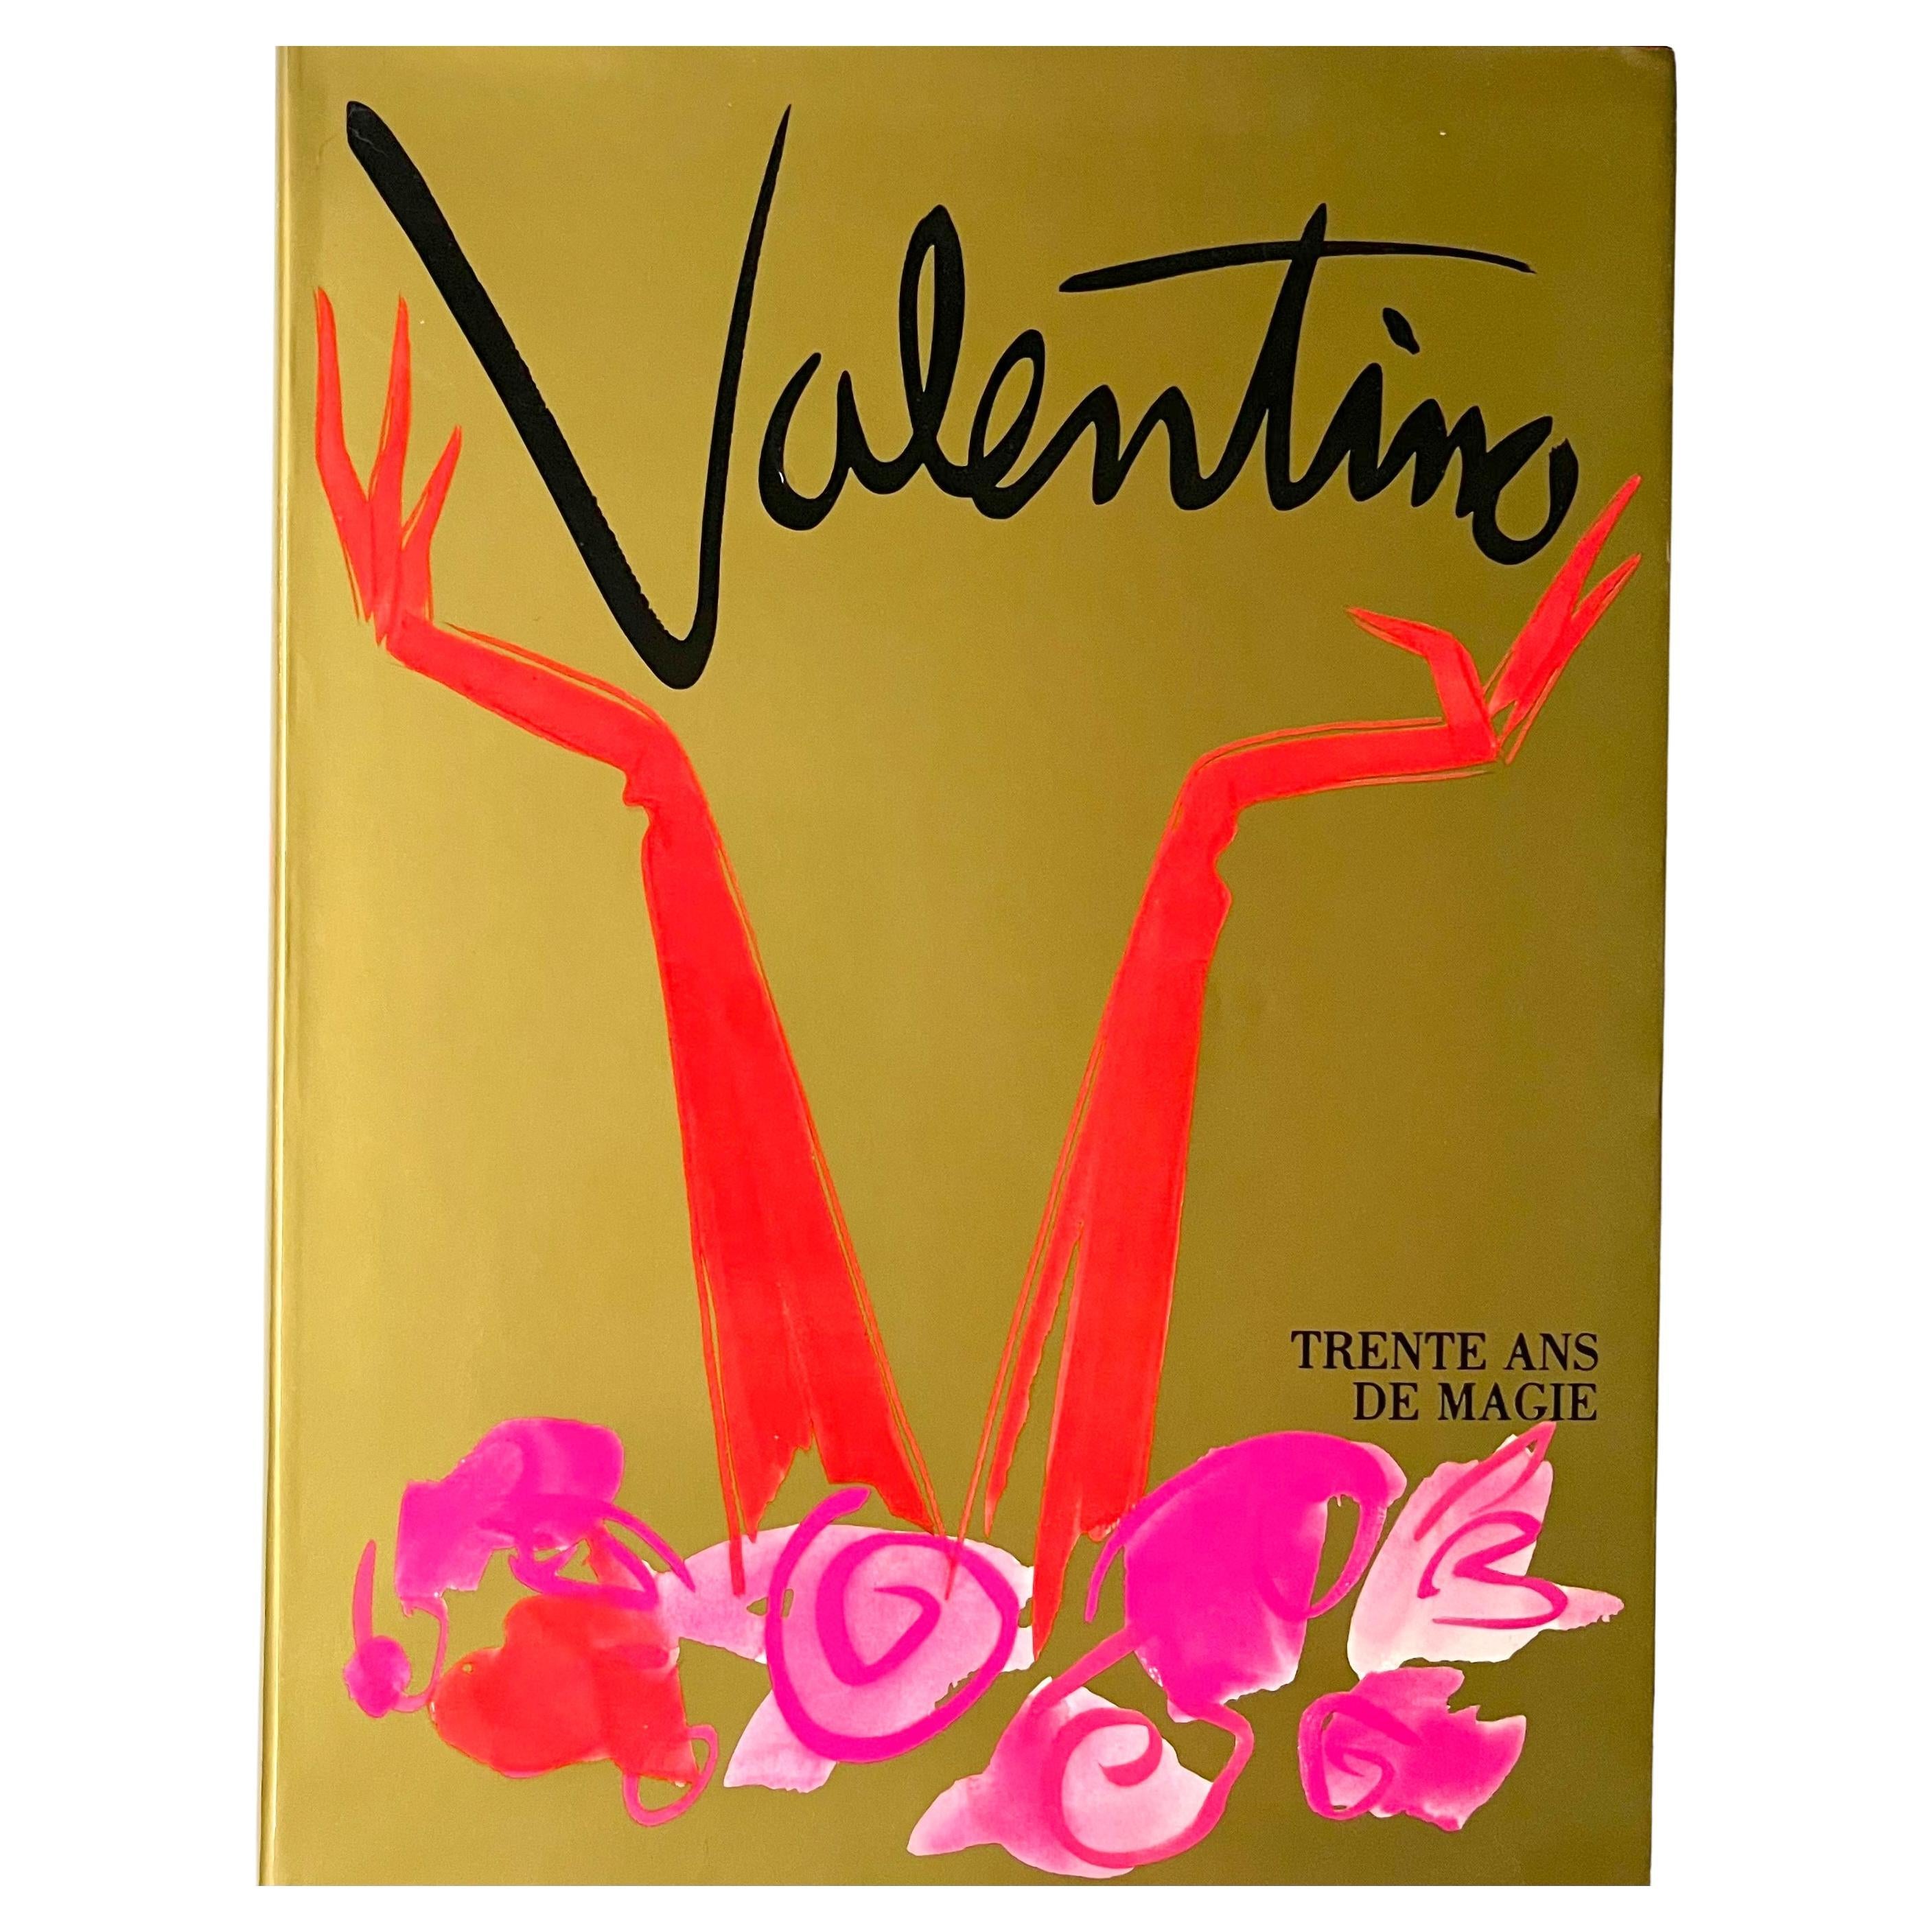 Trente Ans de Magie 1ère édition française de Valentino, 1991